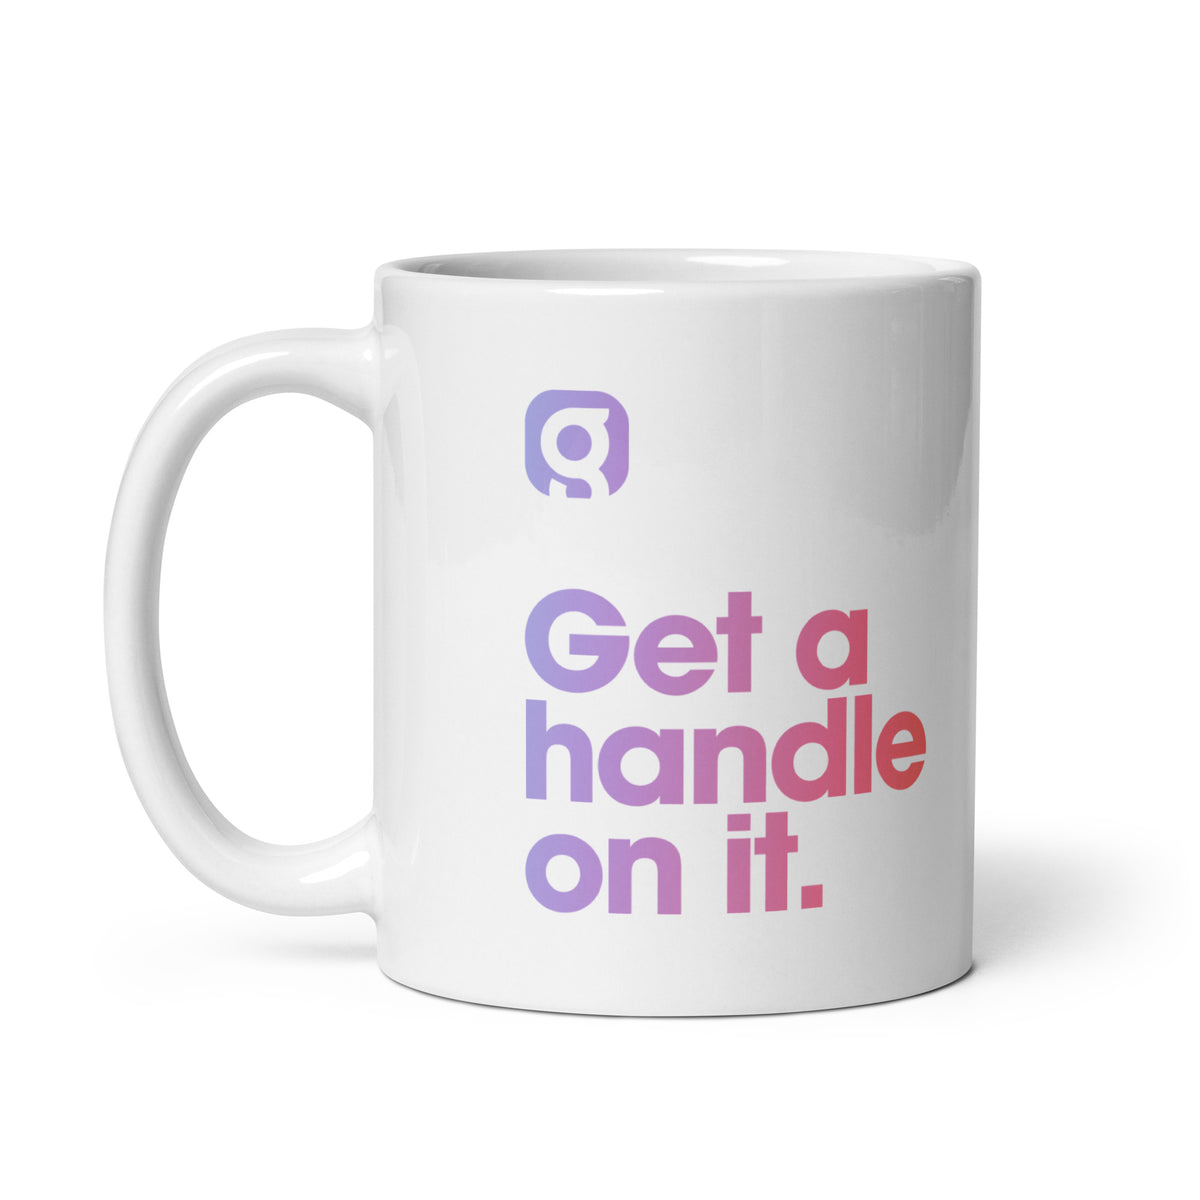 Get a handle on it! Mug - White